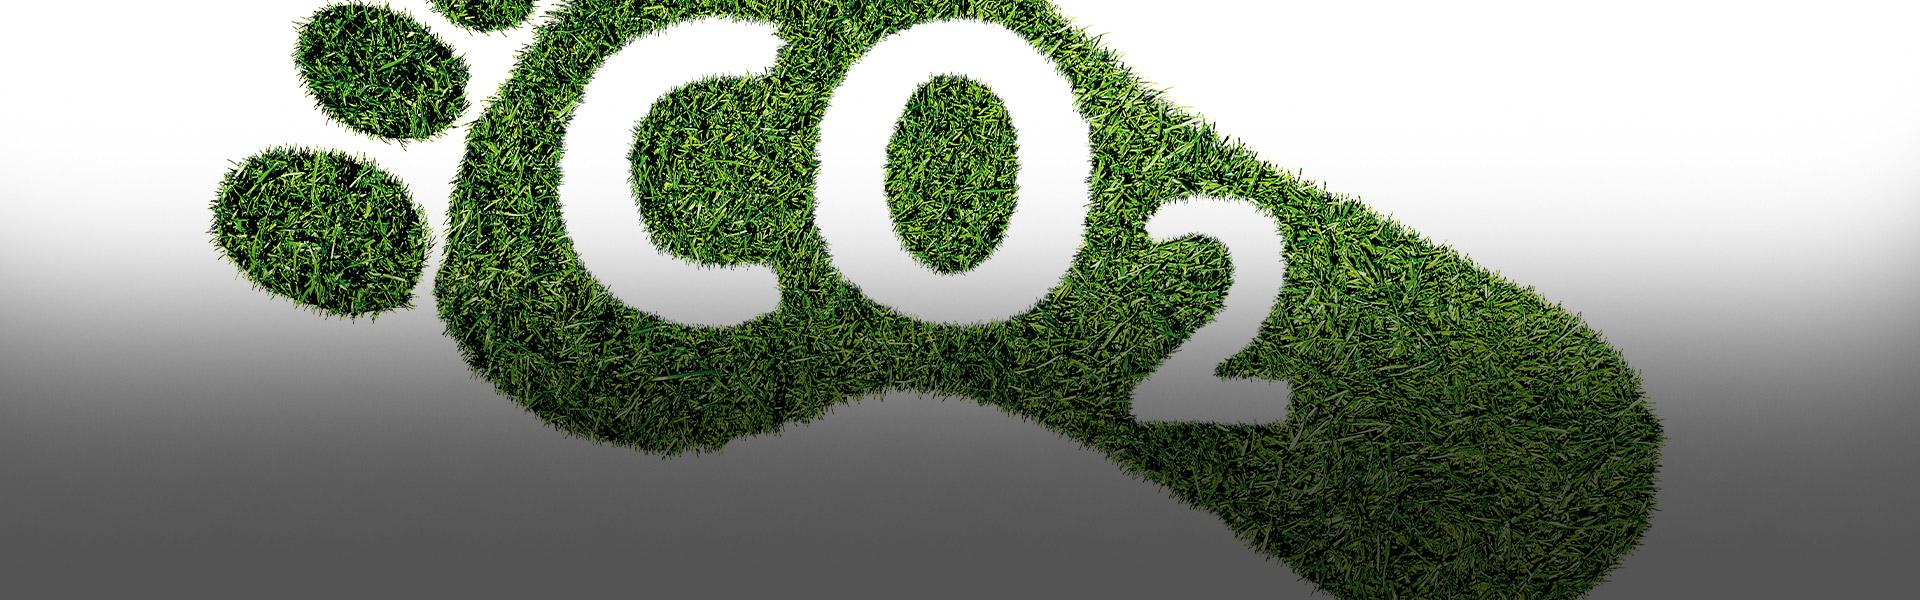 Keeping an eye on the Corporate Carbon Footprint - Doka